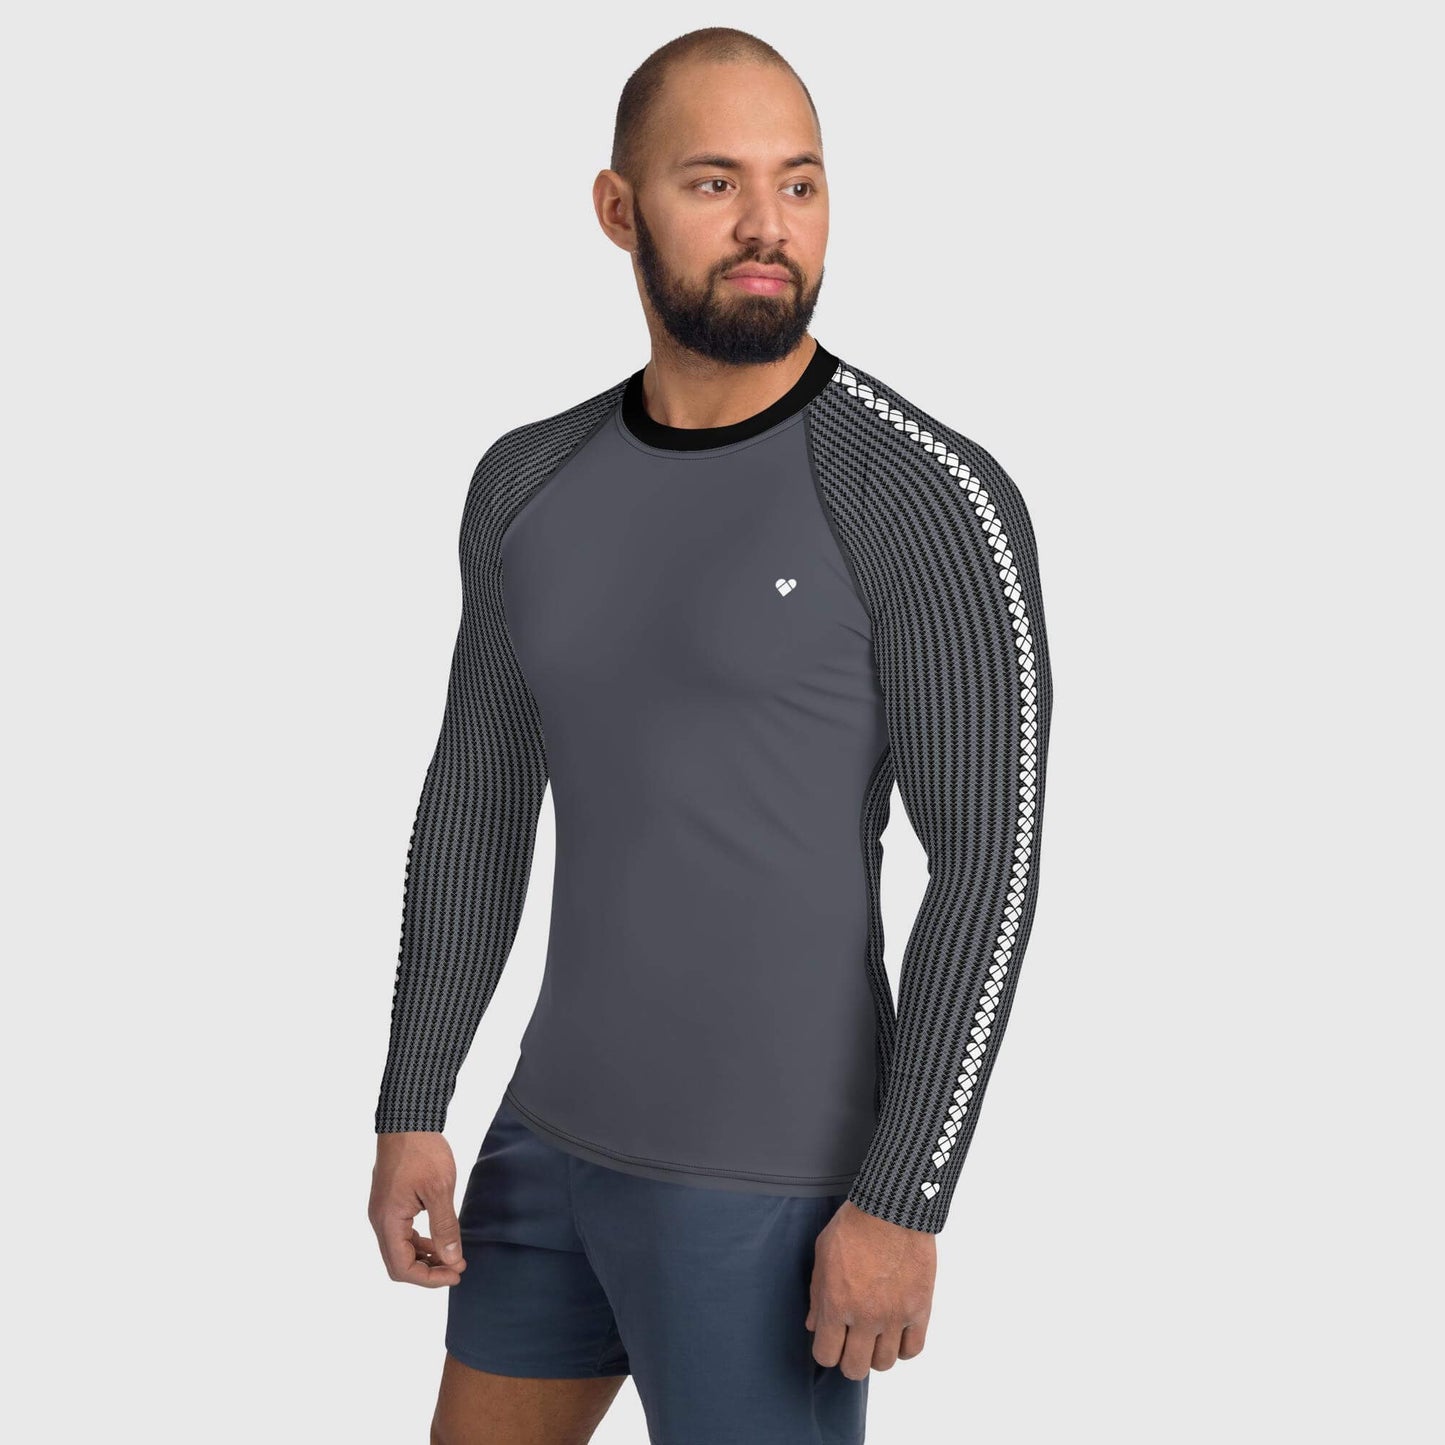 Amor Primero Collection: Lovogram Pattern for Men's Sports Wear